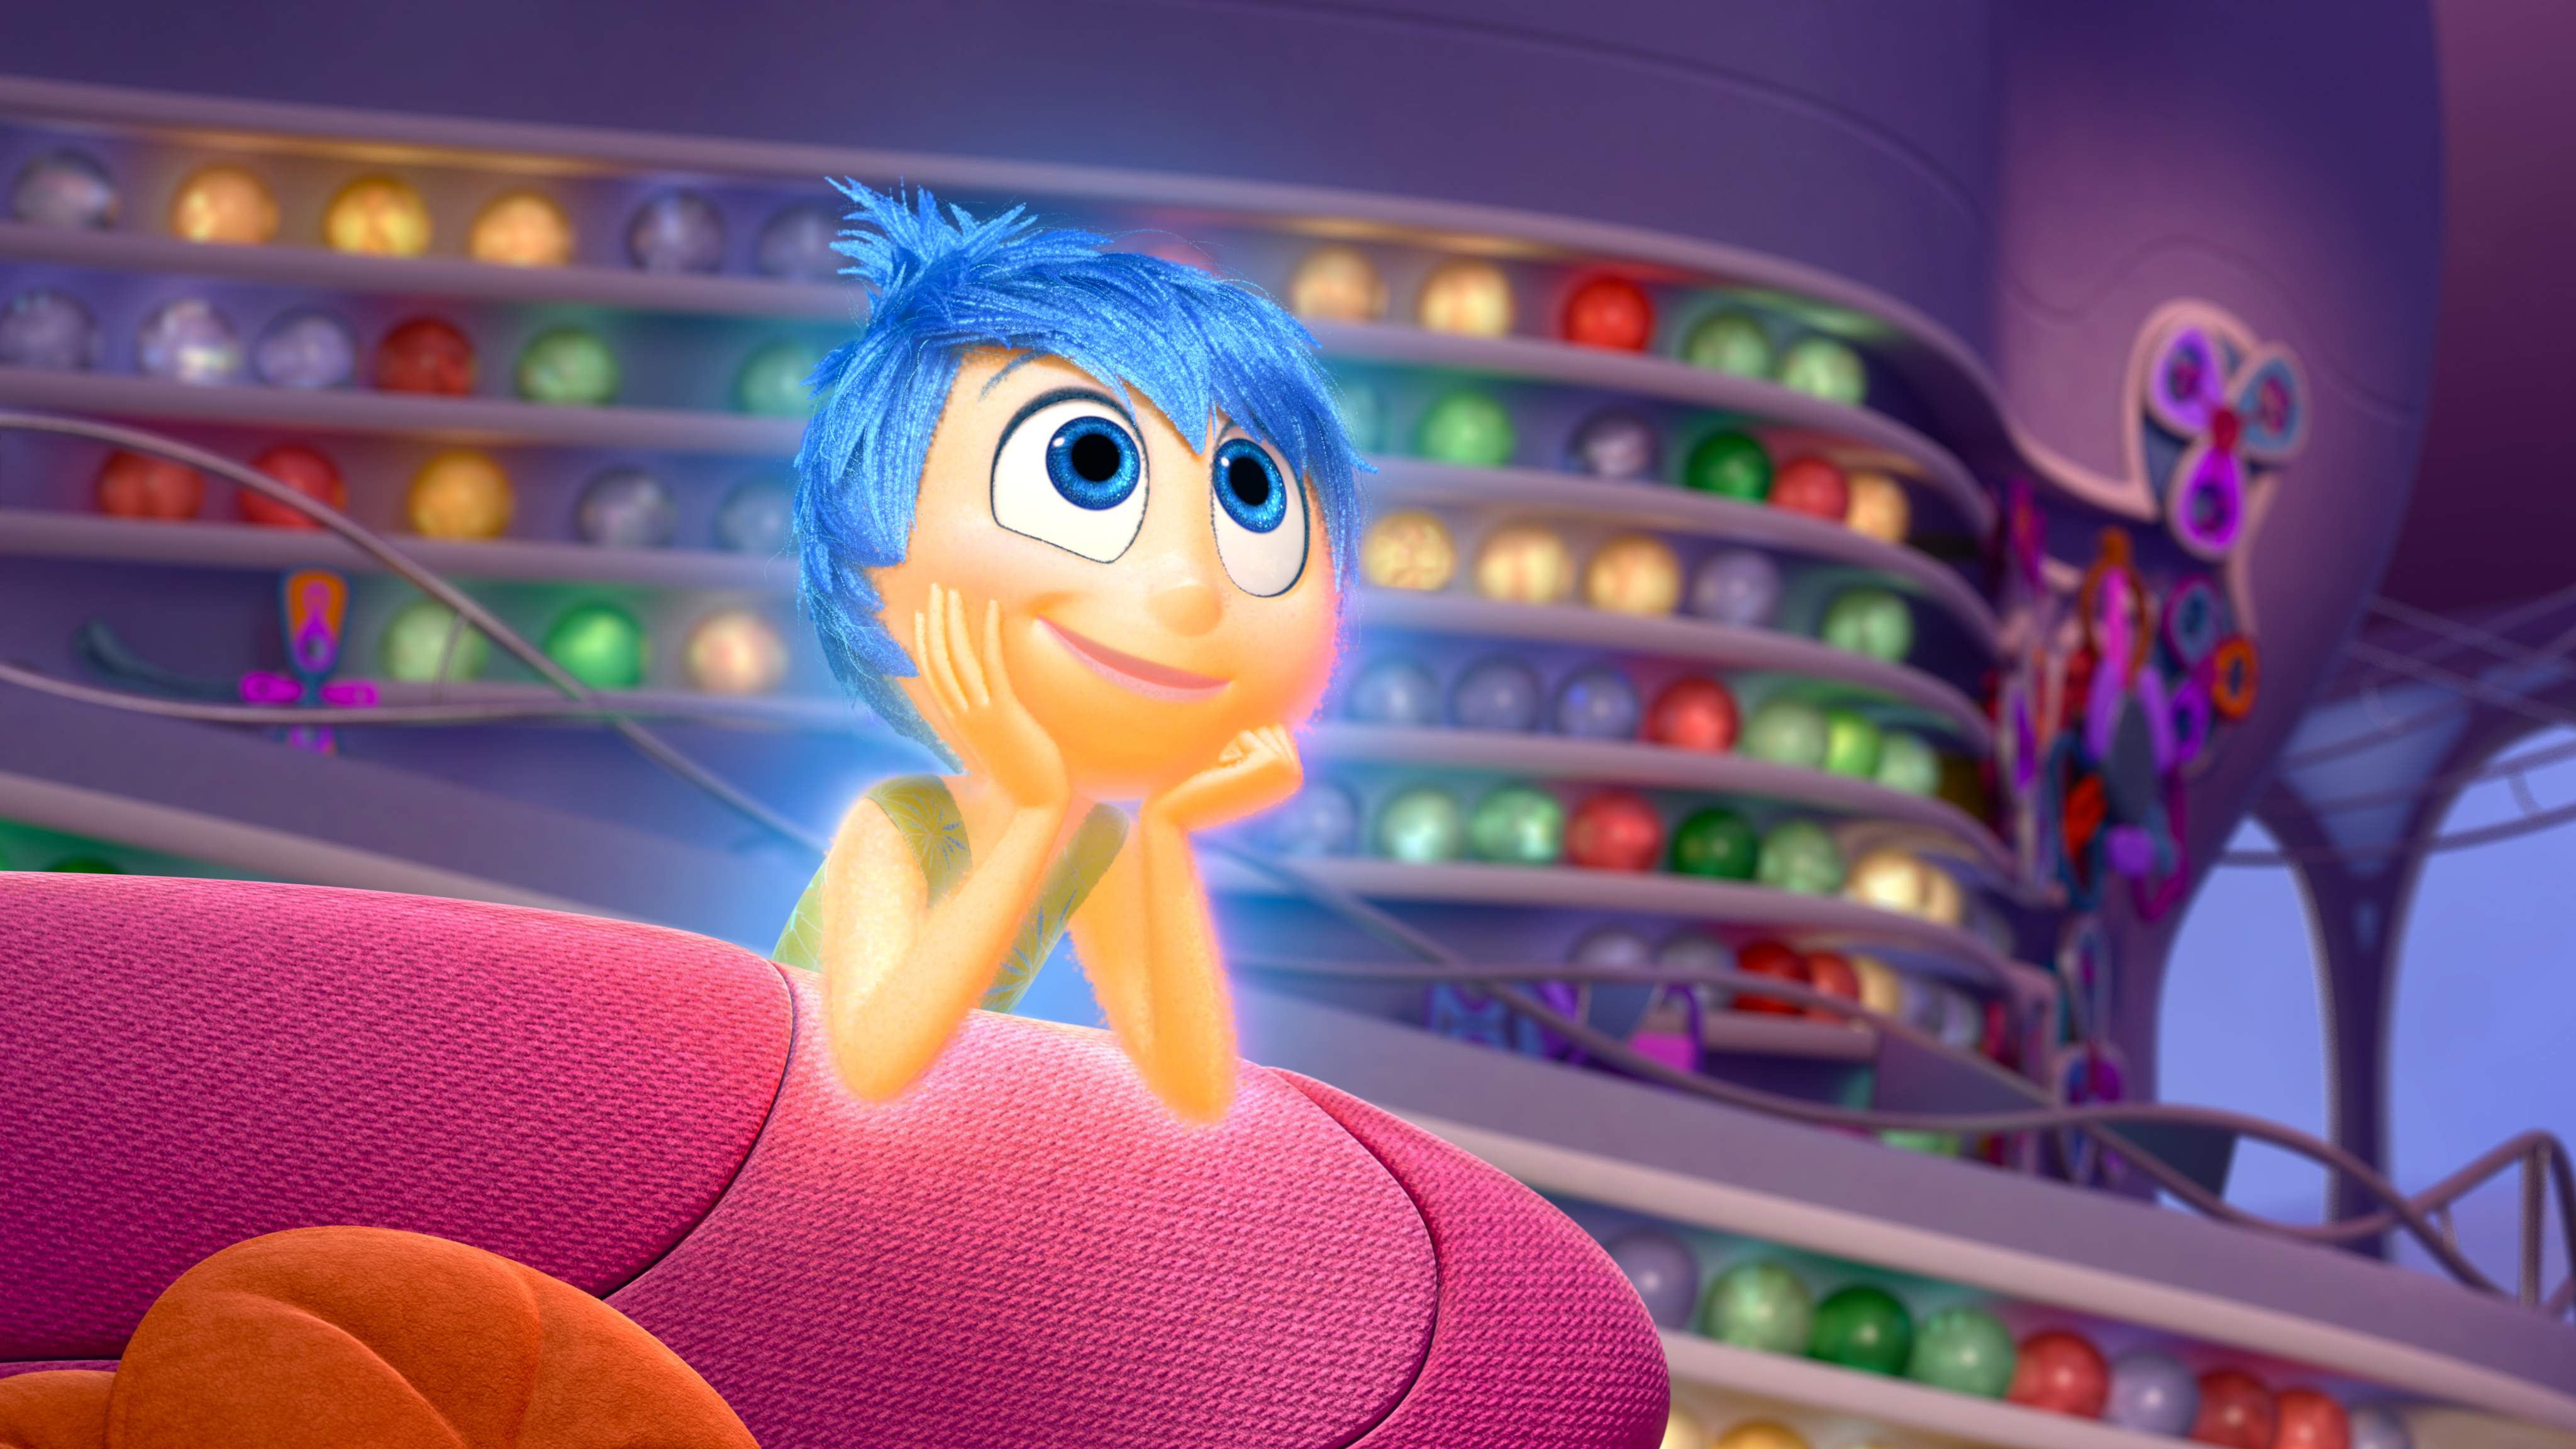 Disney Pixar Inside Out Movie Poster Ikigai